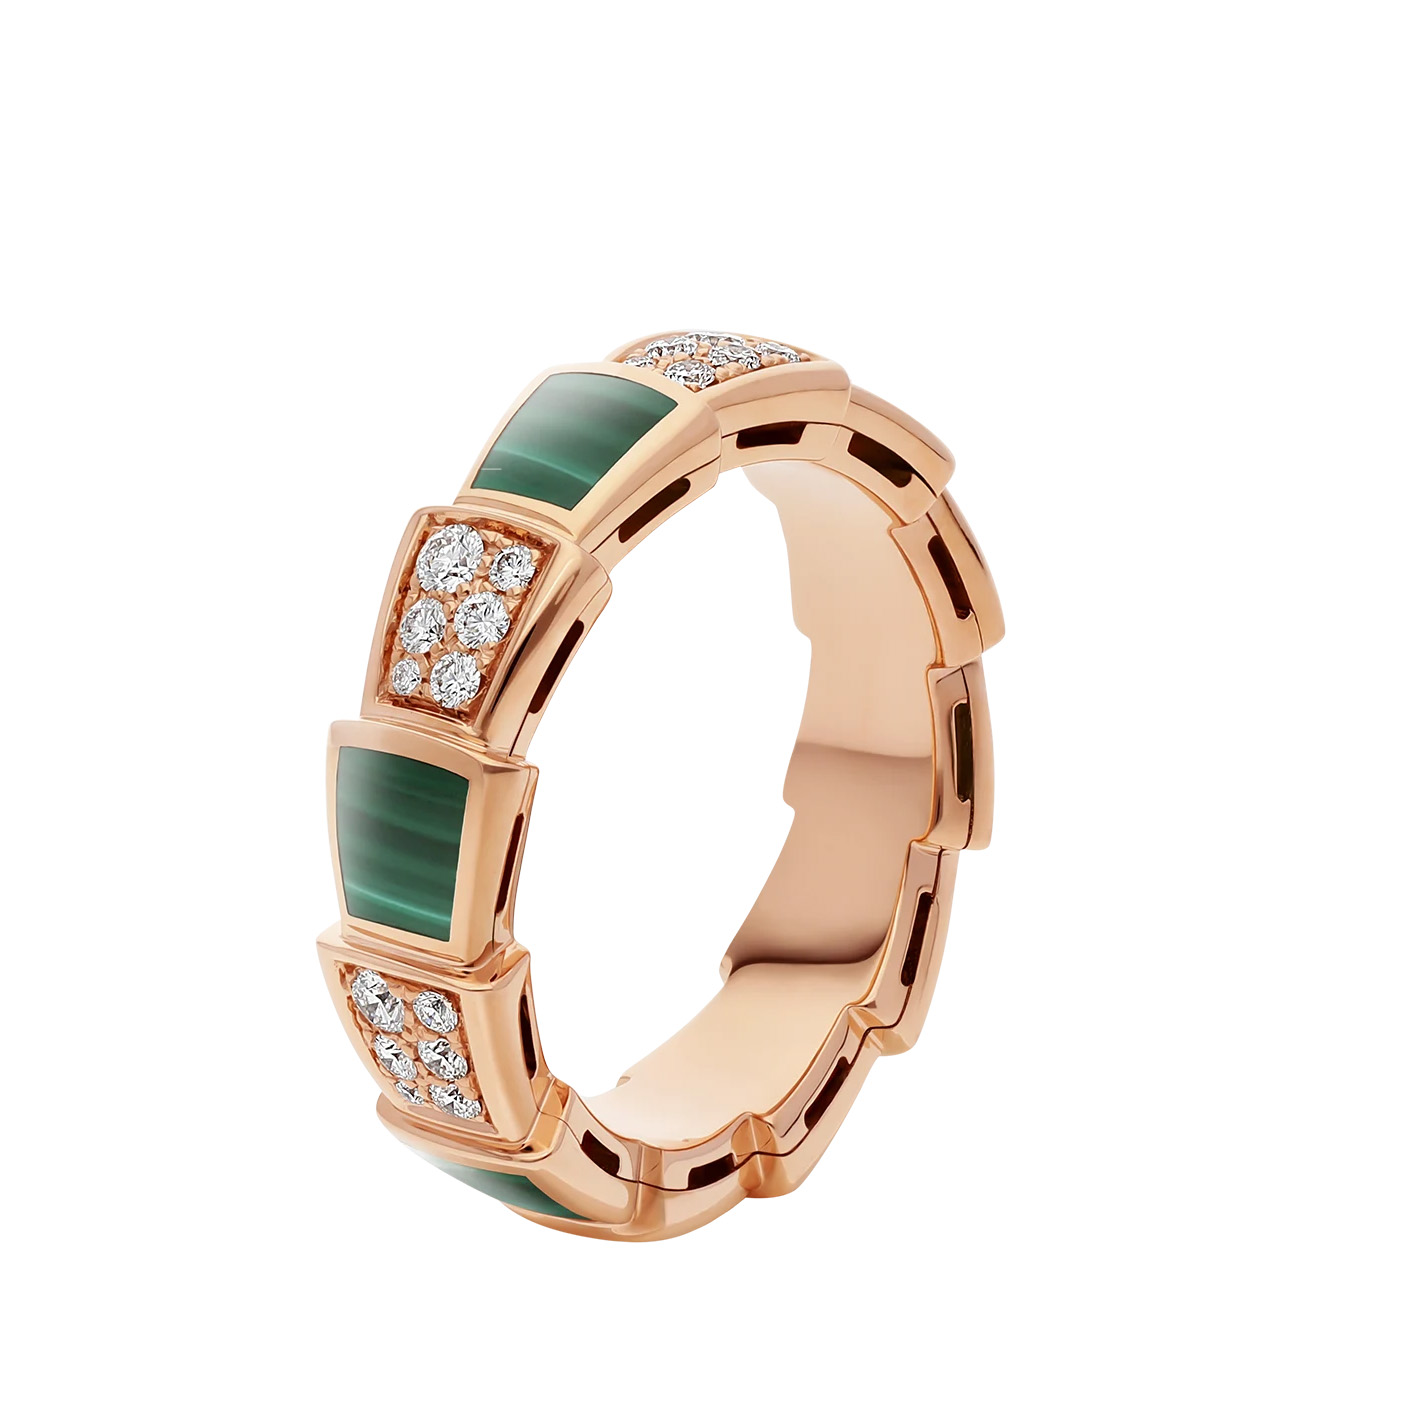 Wholesale OEM design 18k rose gold ring set with malachite elements OEM/ODM Jewelry and pavé diamonds